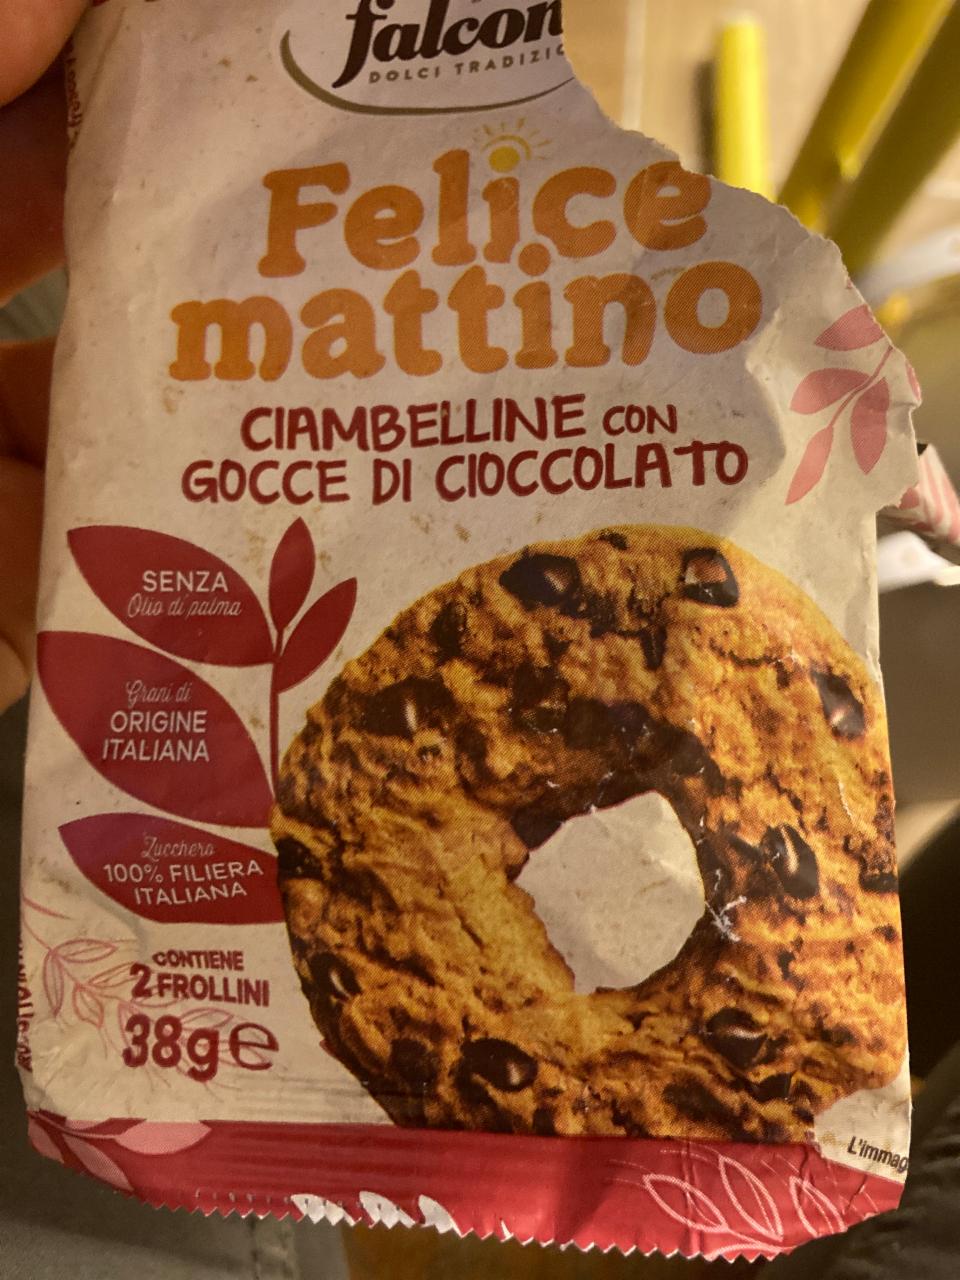 Fotografie - Felice mattino sušenky s kousky čokolády Falcone